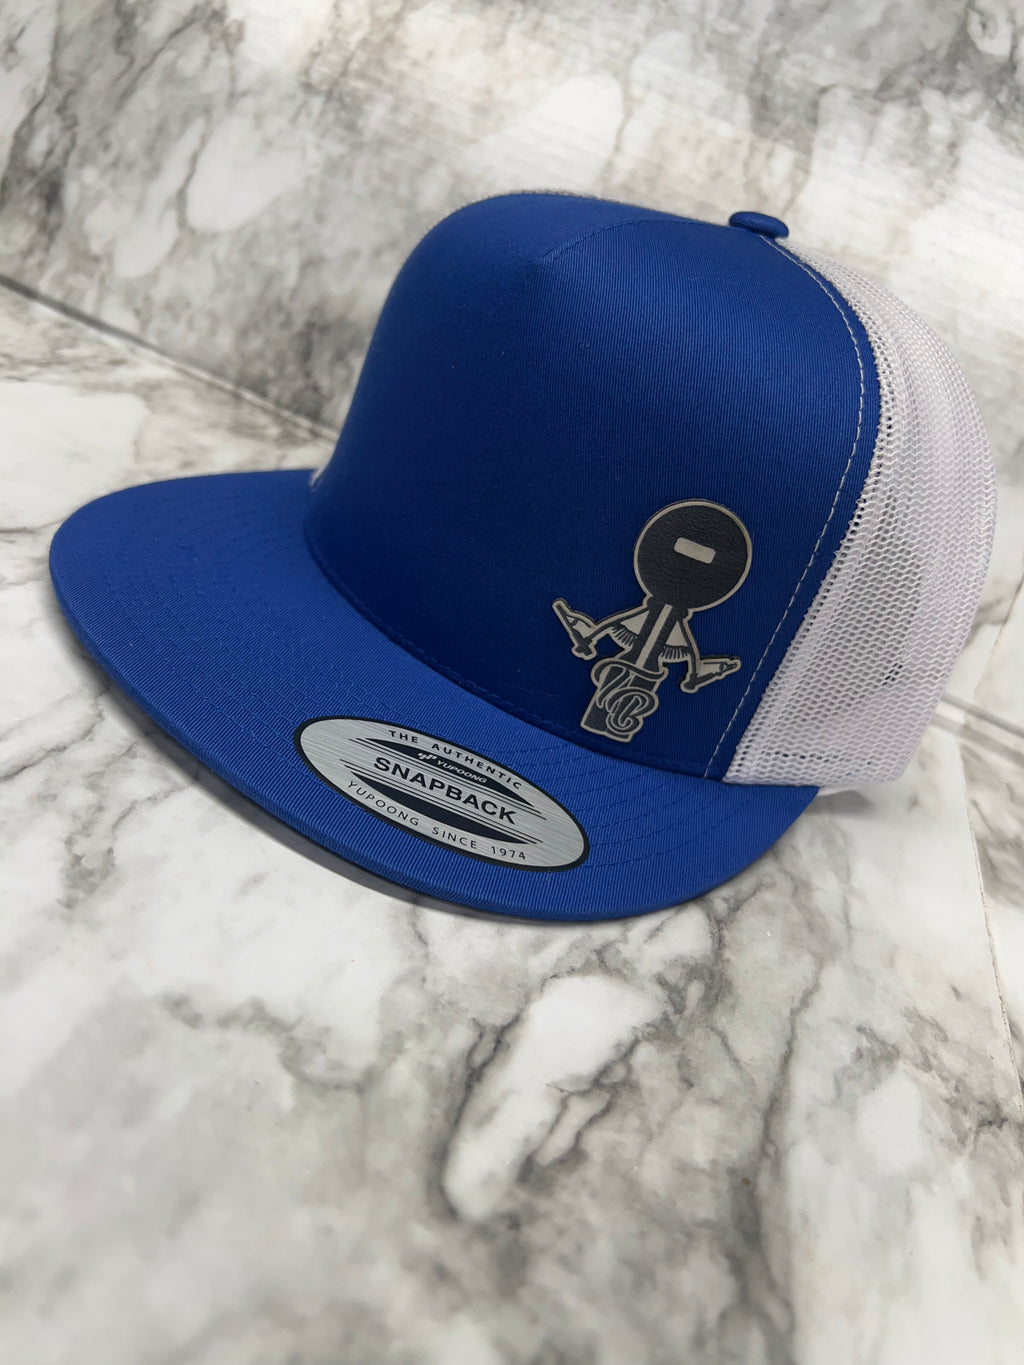 White logo blue hat